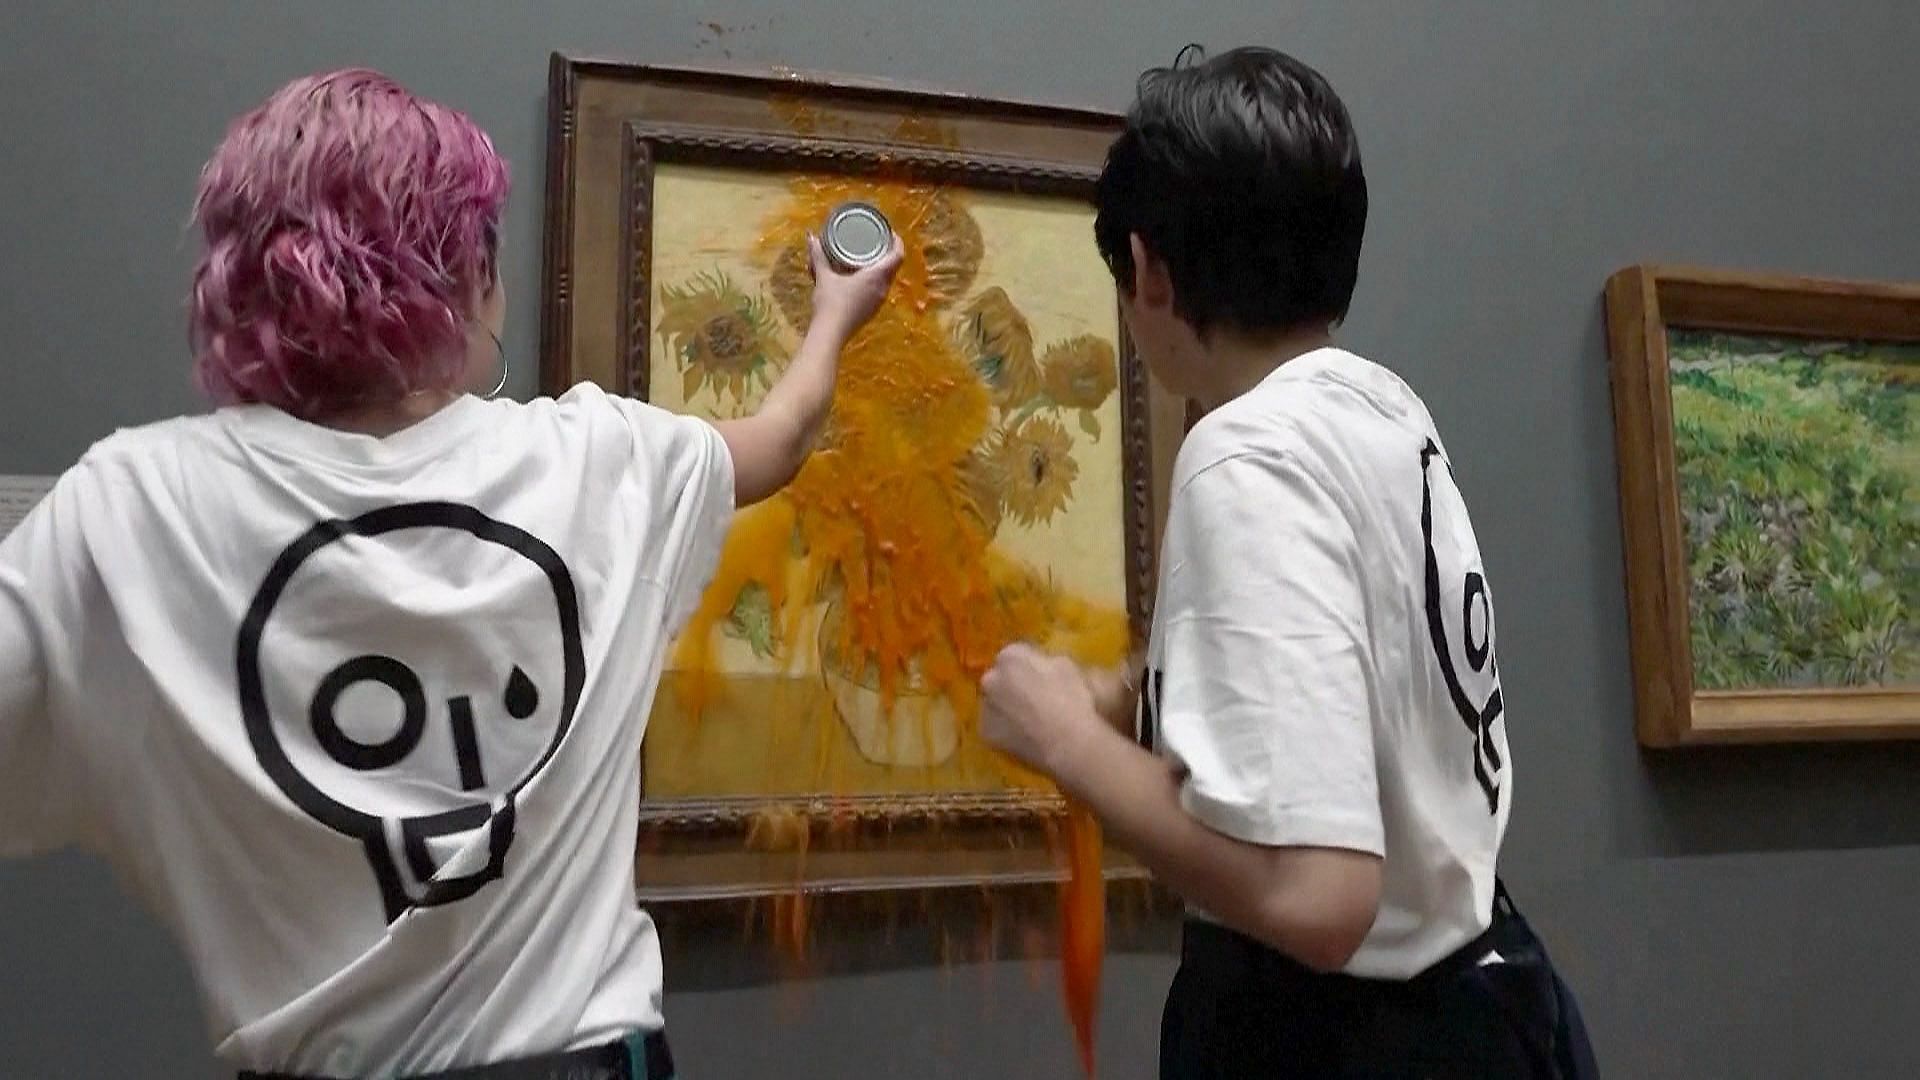 Two activist deface a Van Gogh painting (image via NBC news)